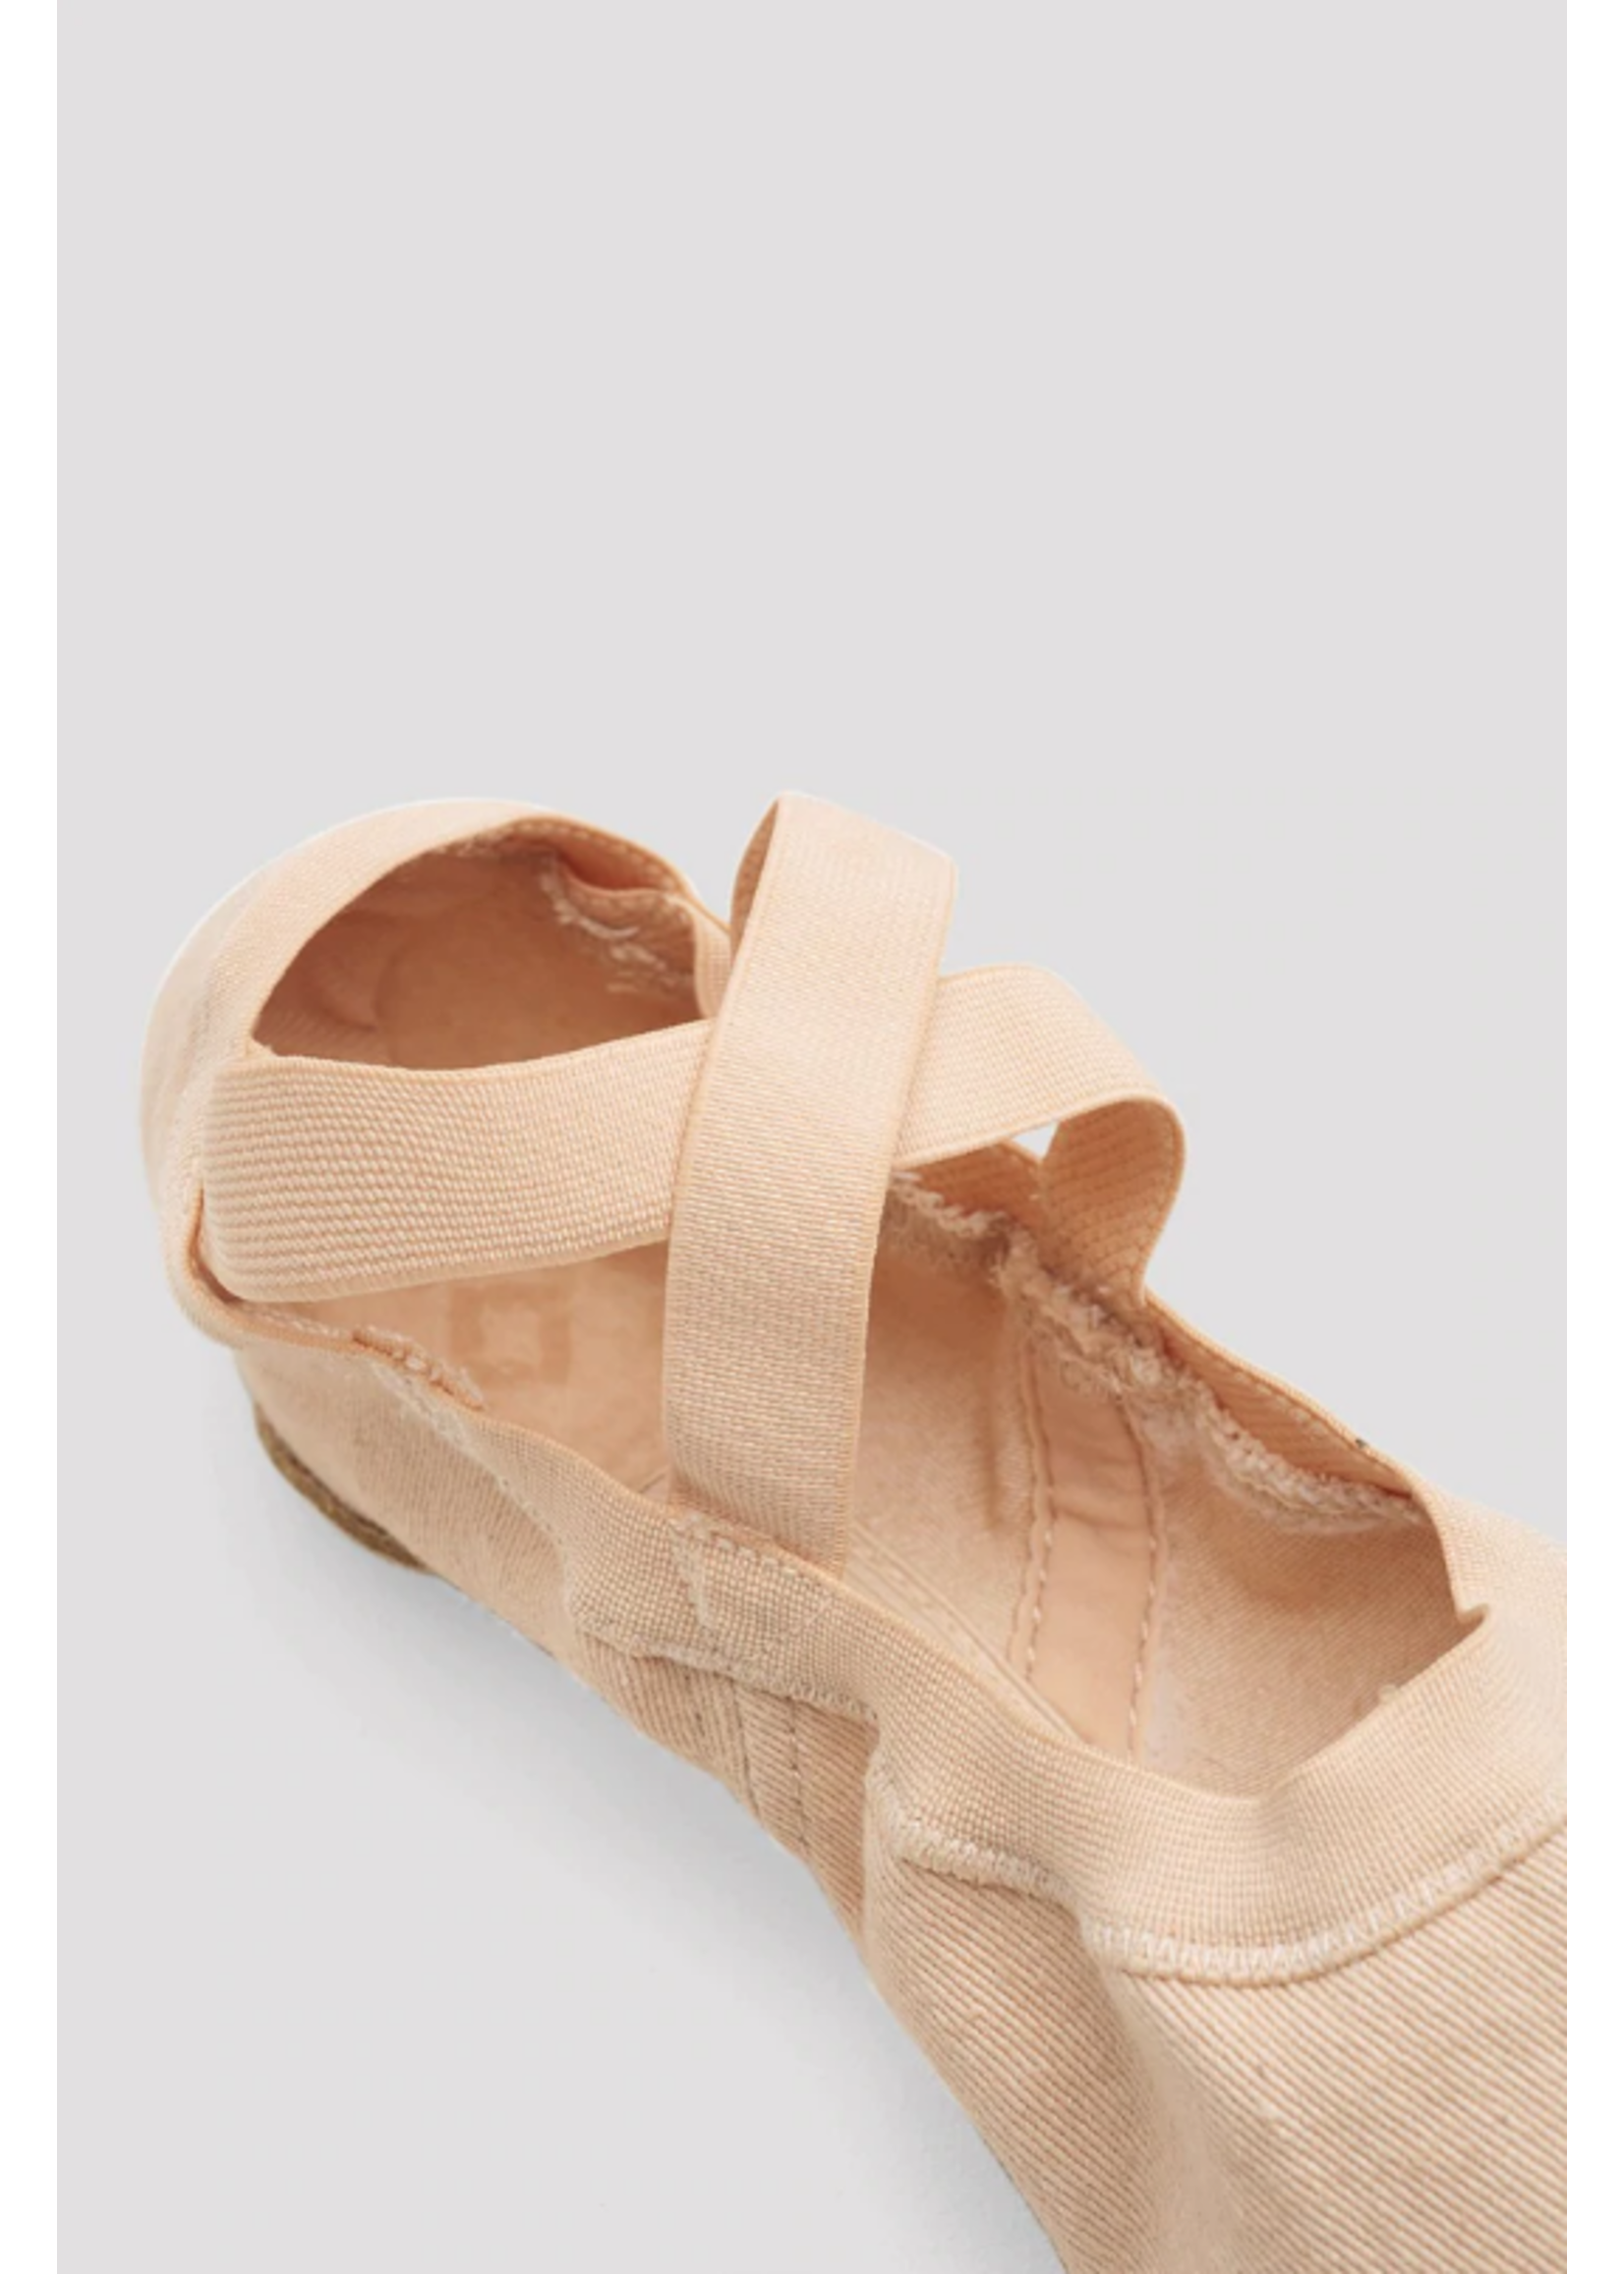 Bloch Bloch Synchrony Ballet Shoe